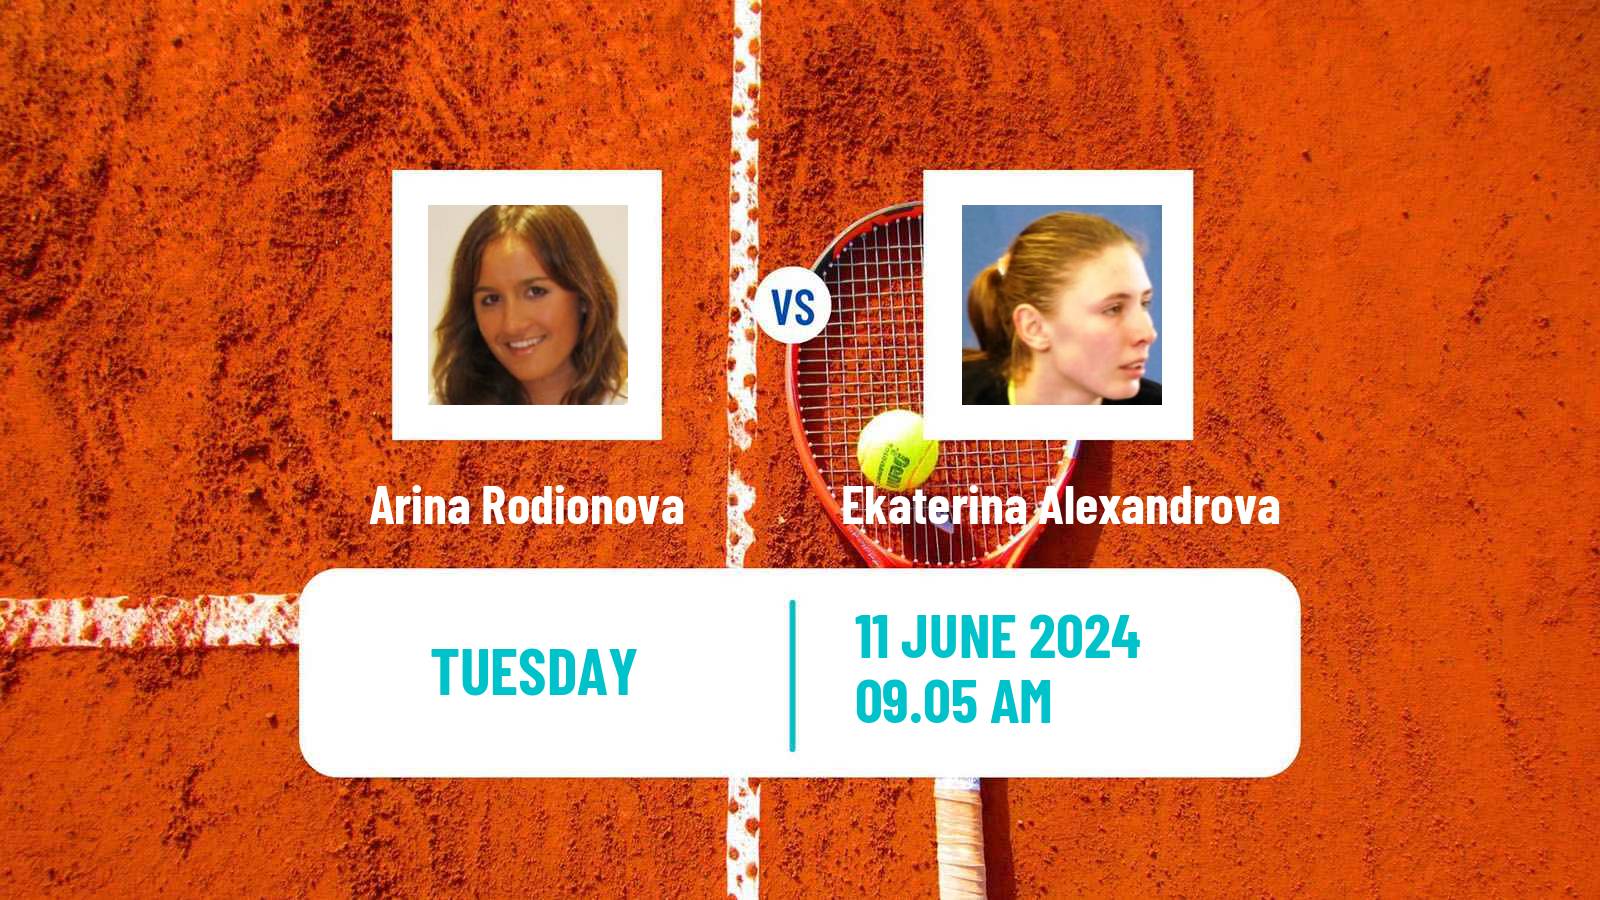 Tennis WTA Hertogenbosch Arina Rodionova - Ekaterina Alexandrova